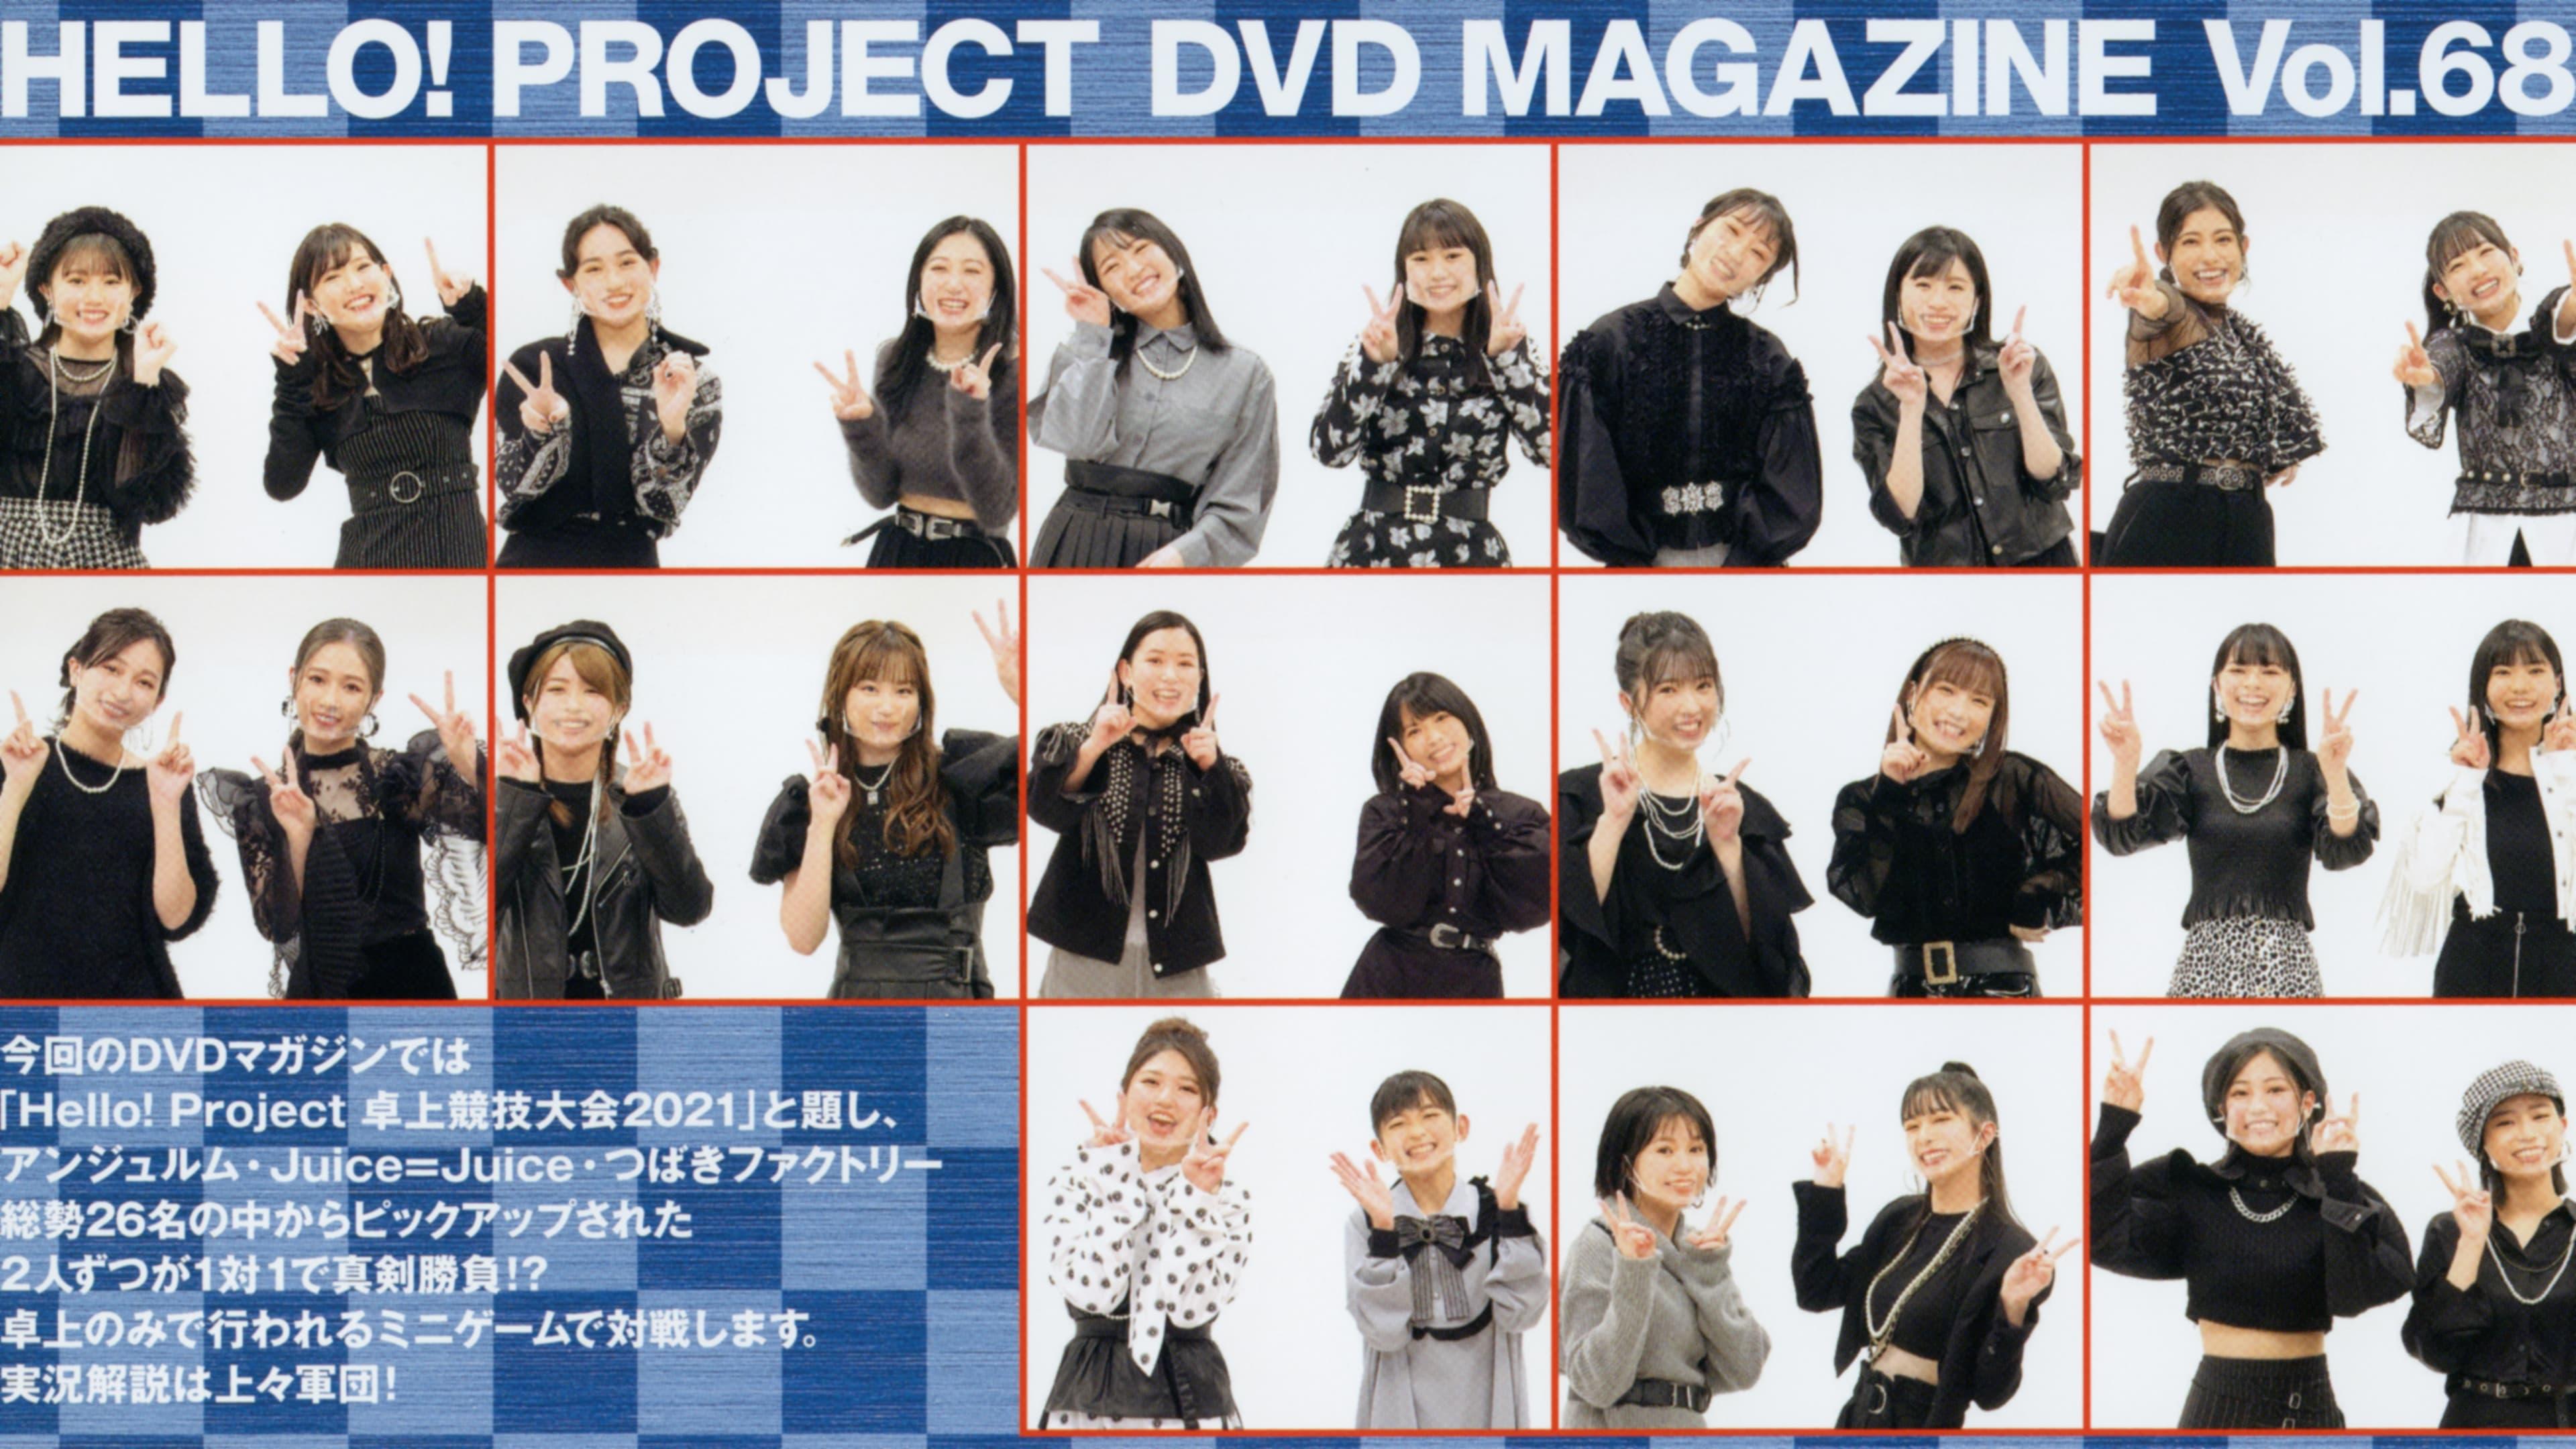 Hello! Project DVD Magazine Vol.68 backdrop